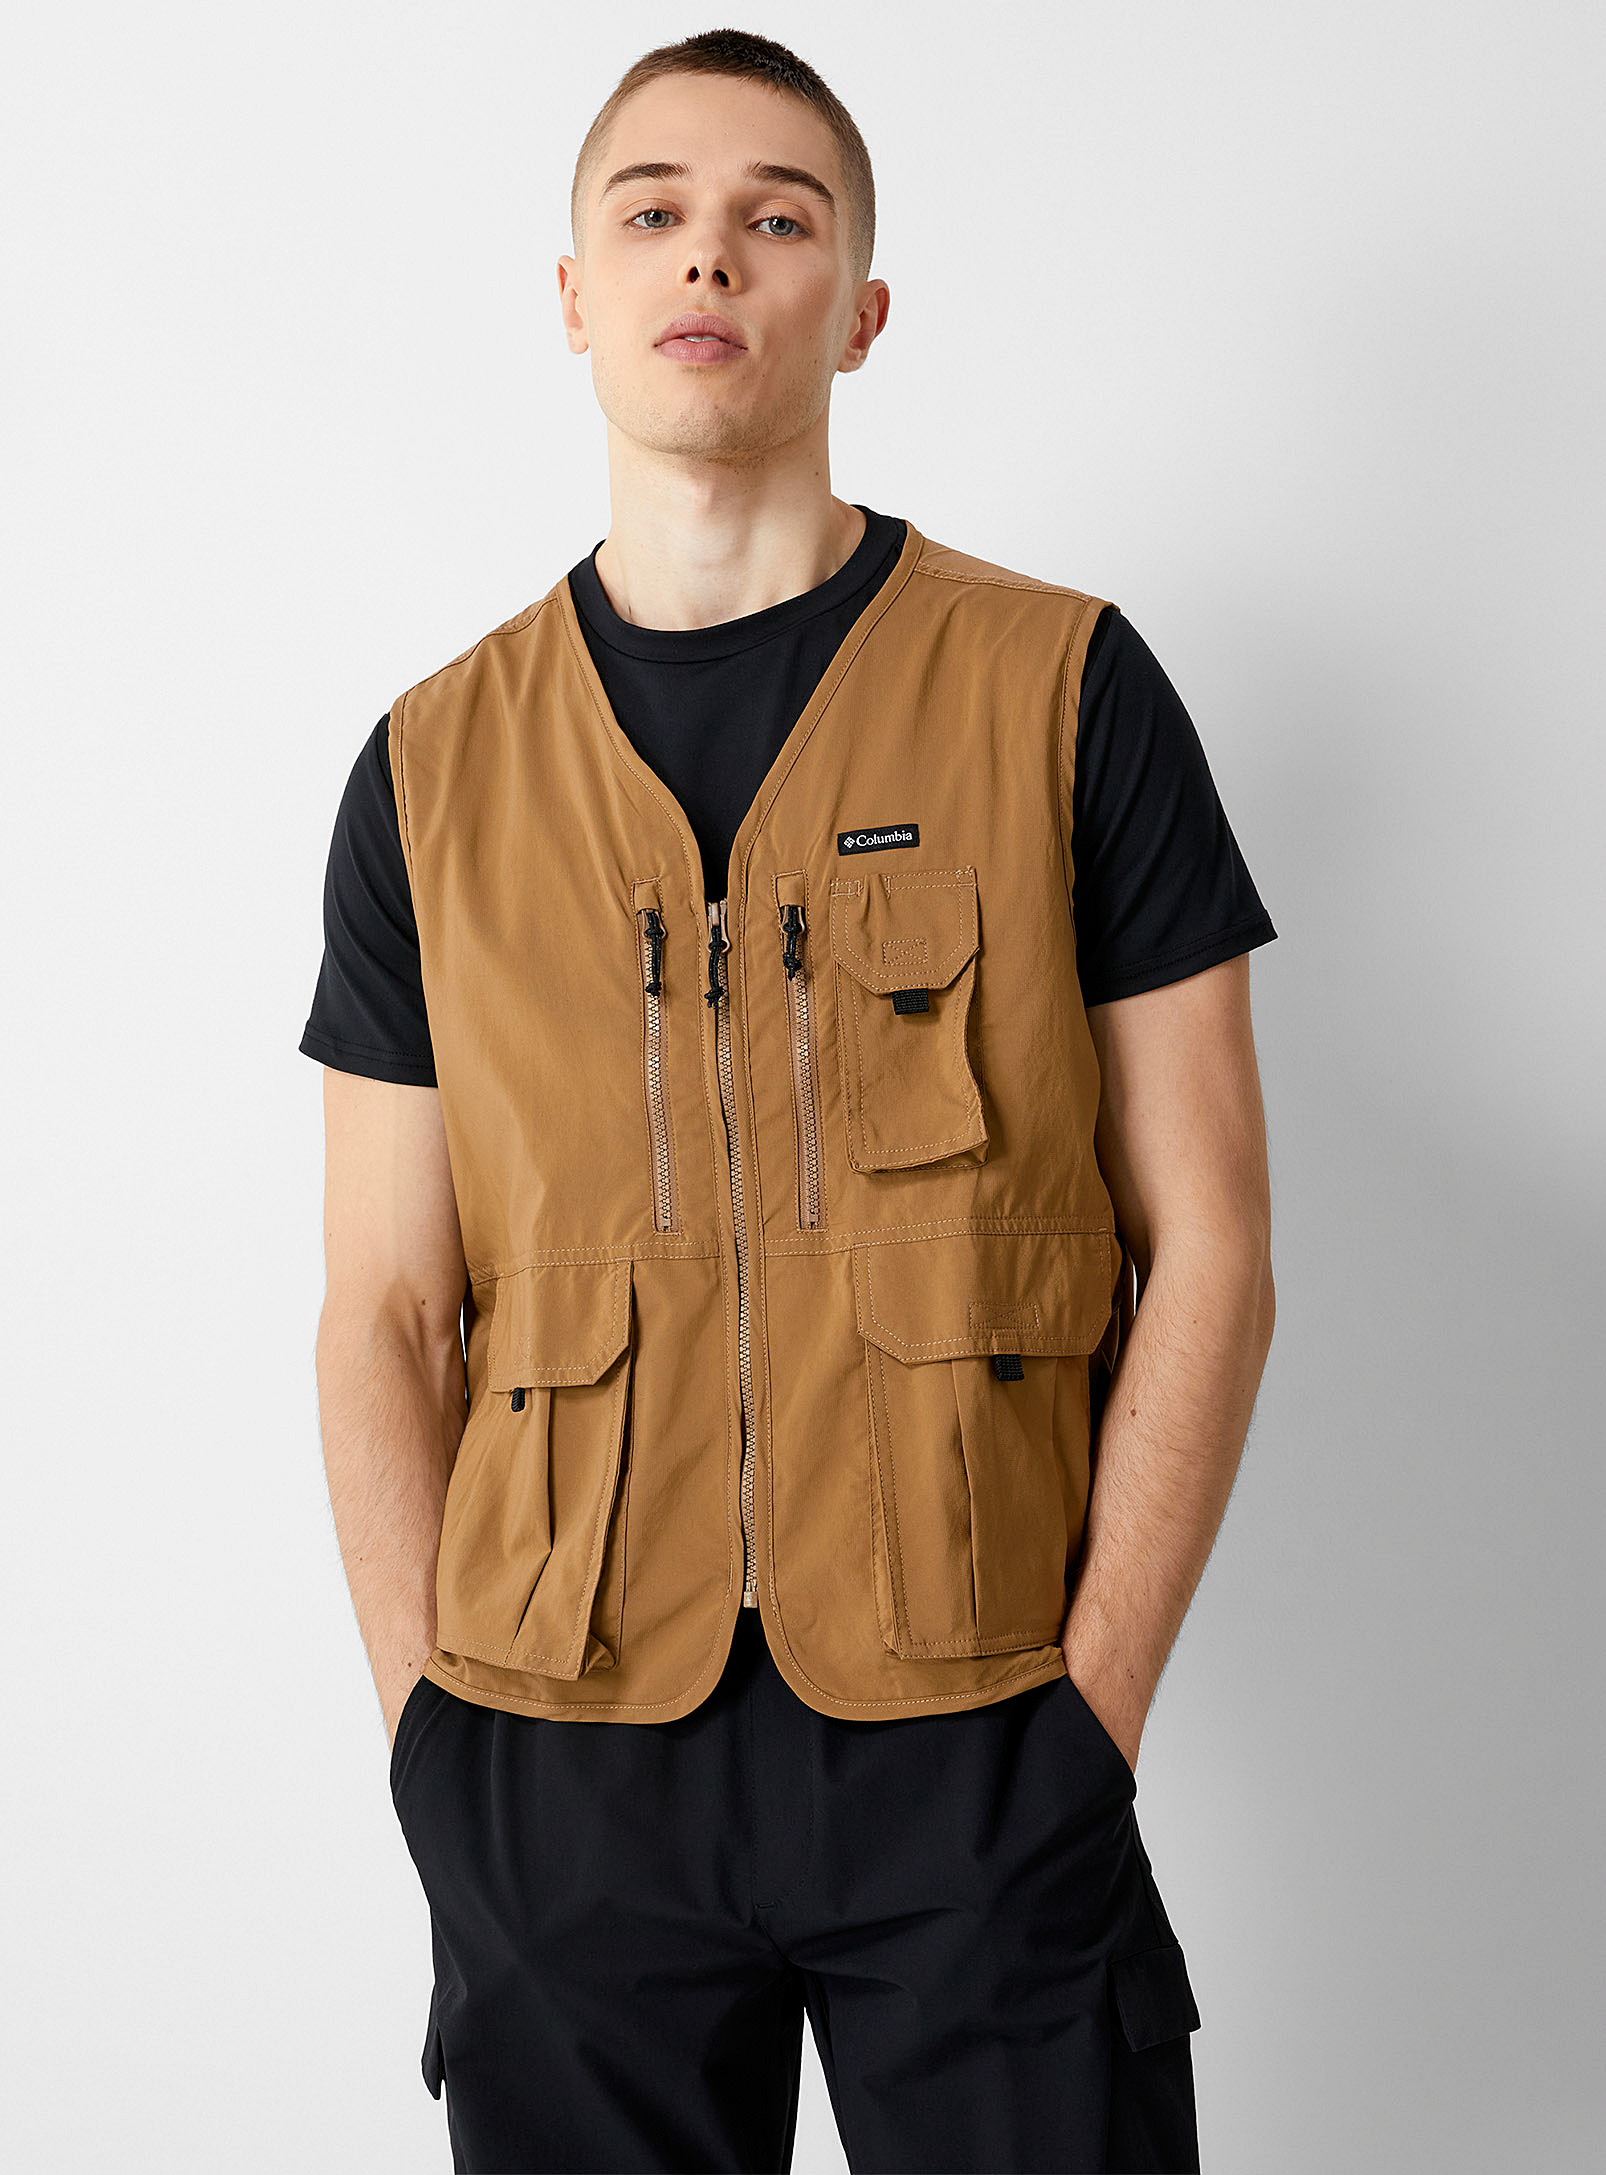 Columbia - Men's Multi-pocket tactical sleeveless jacket